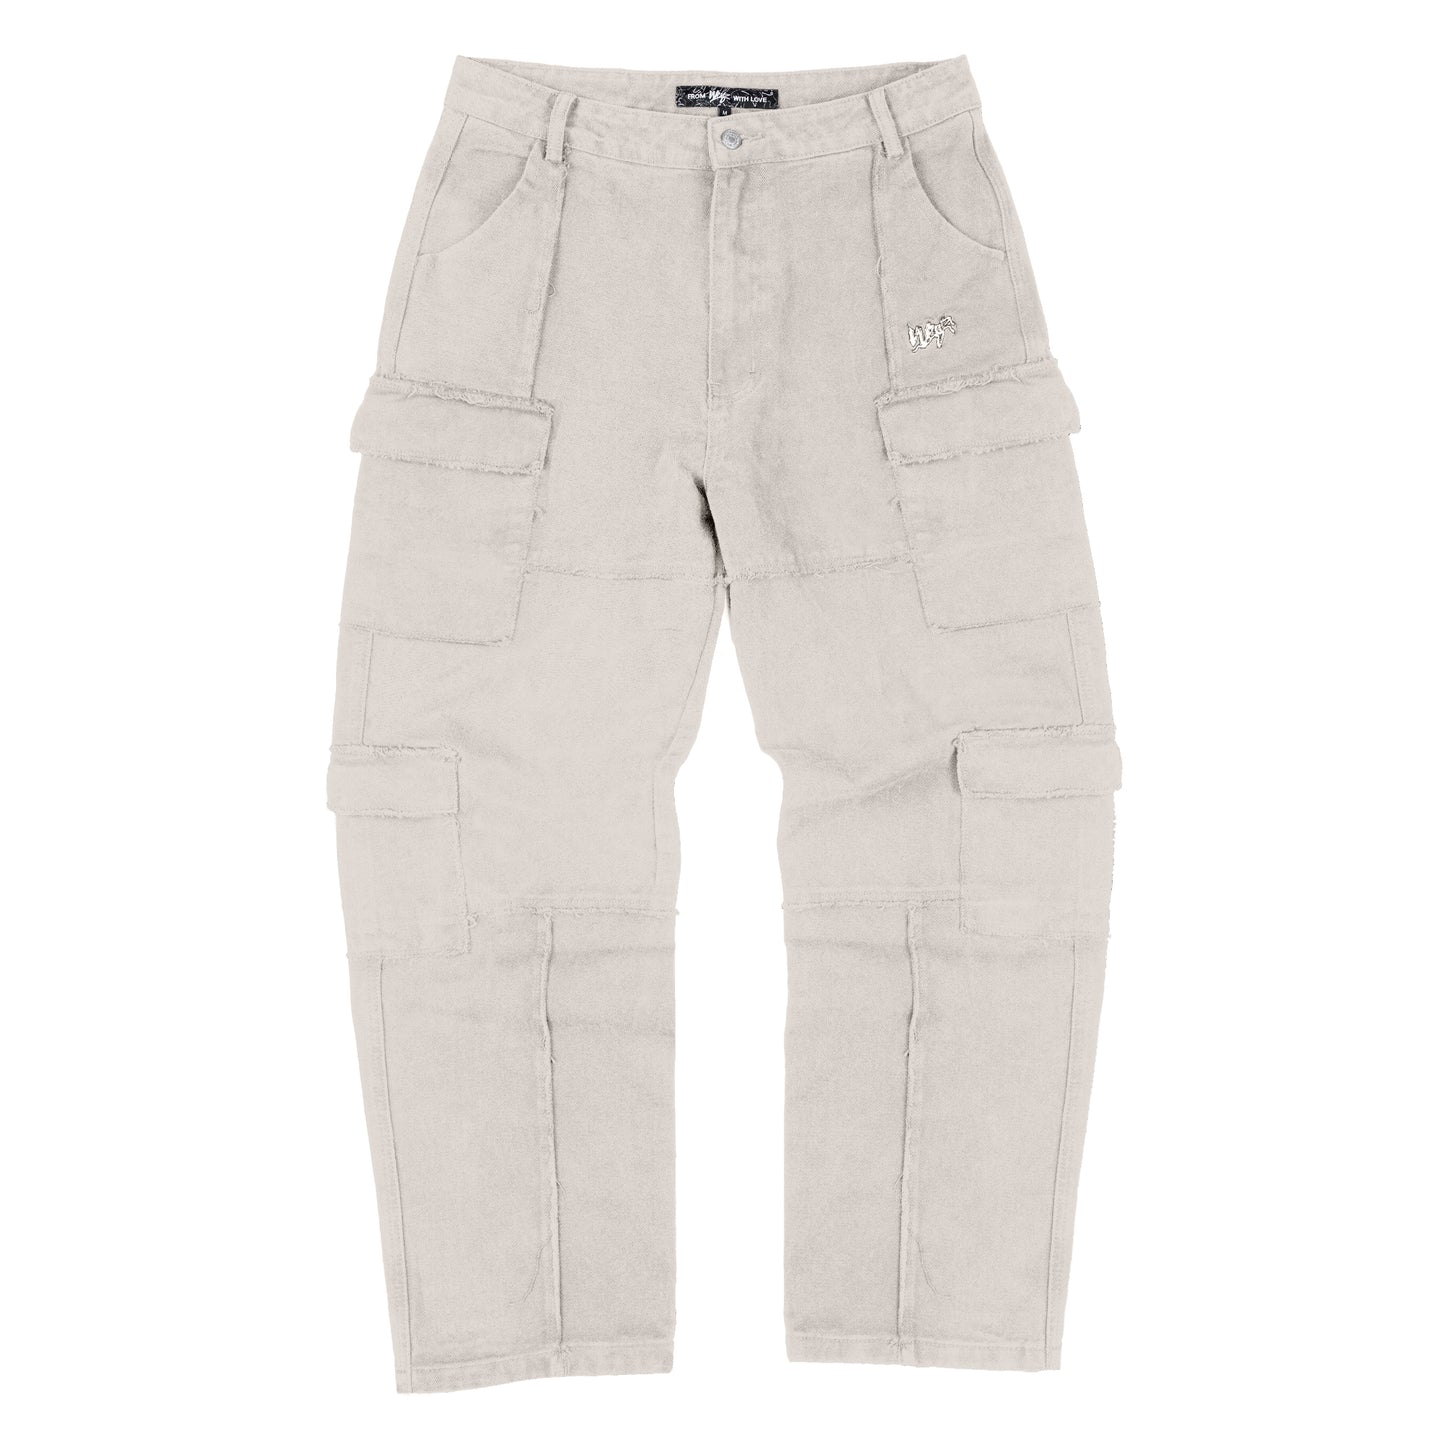 Heavy Cargo Vintage Pants - Beige - XS (28) - Weyz Clothing